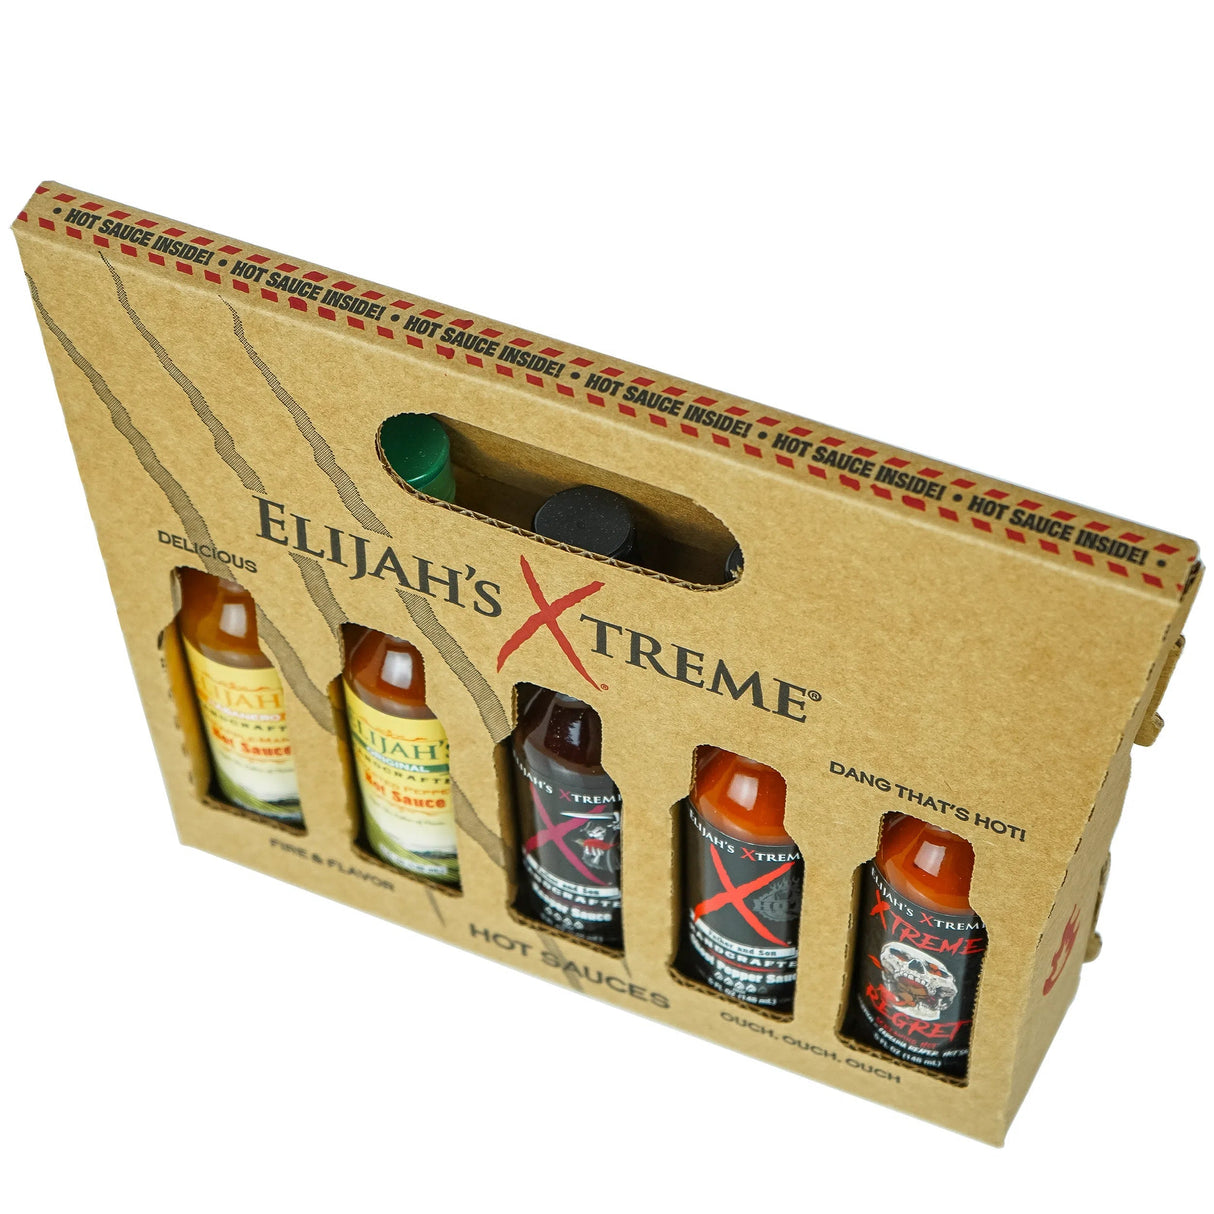 Elijah's Xtreme - 5 Pack Hot Sauce Gift Set | Elijah's Xtreme